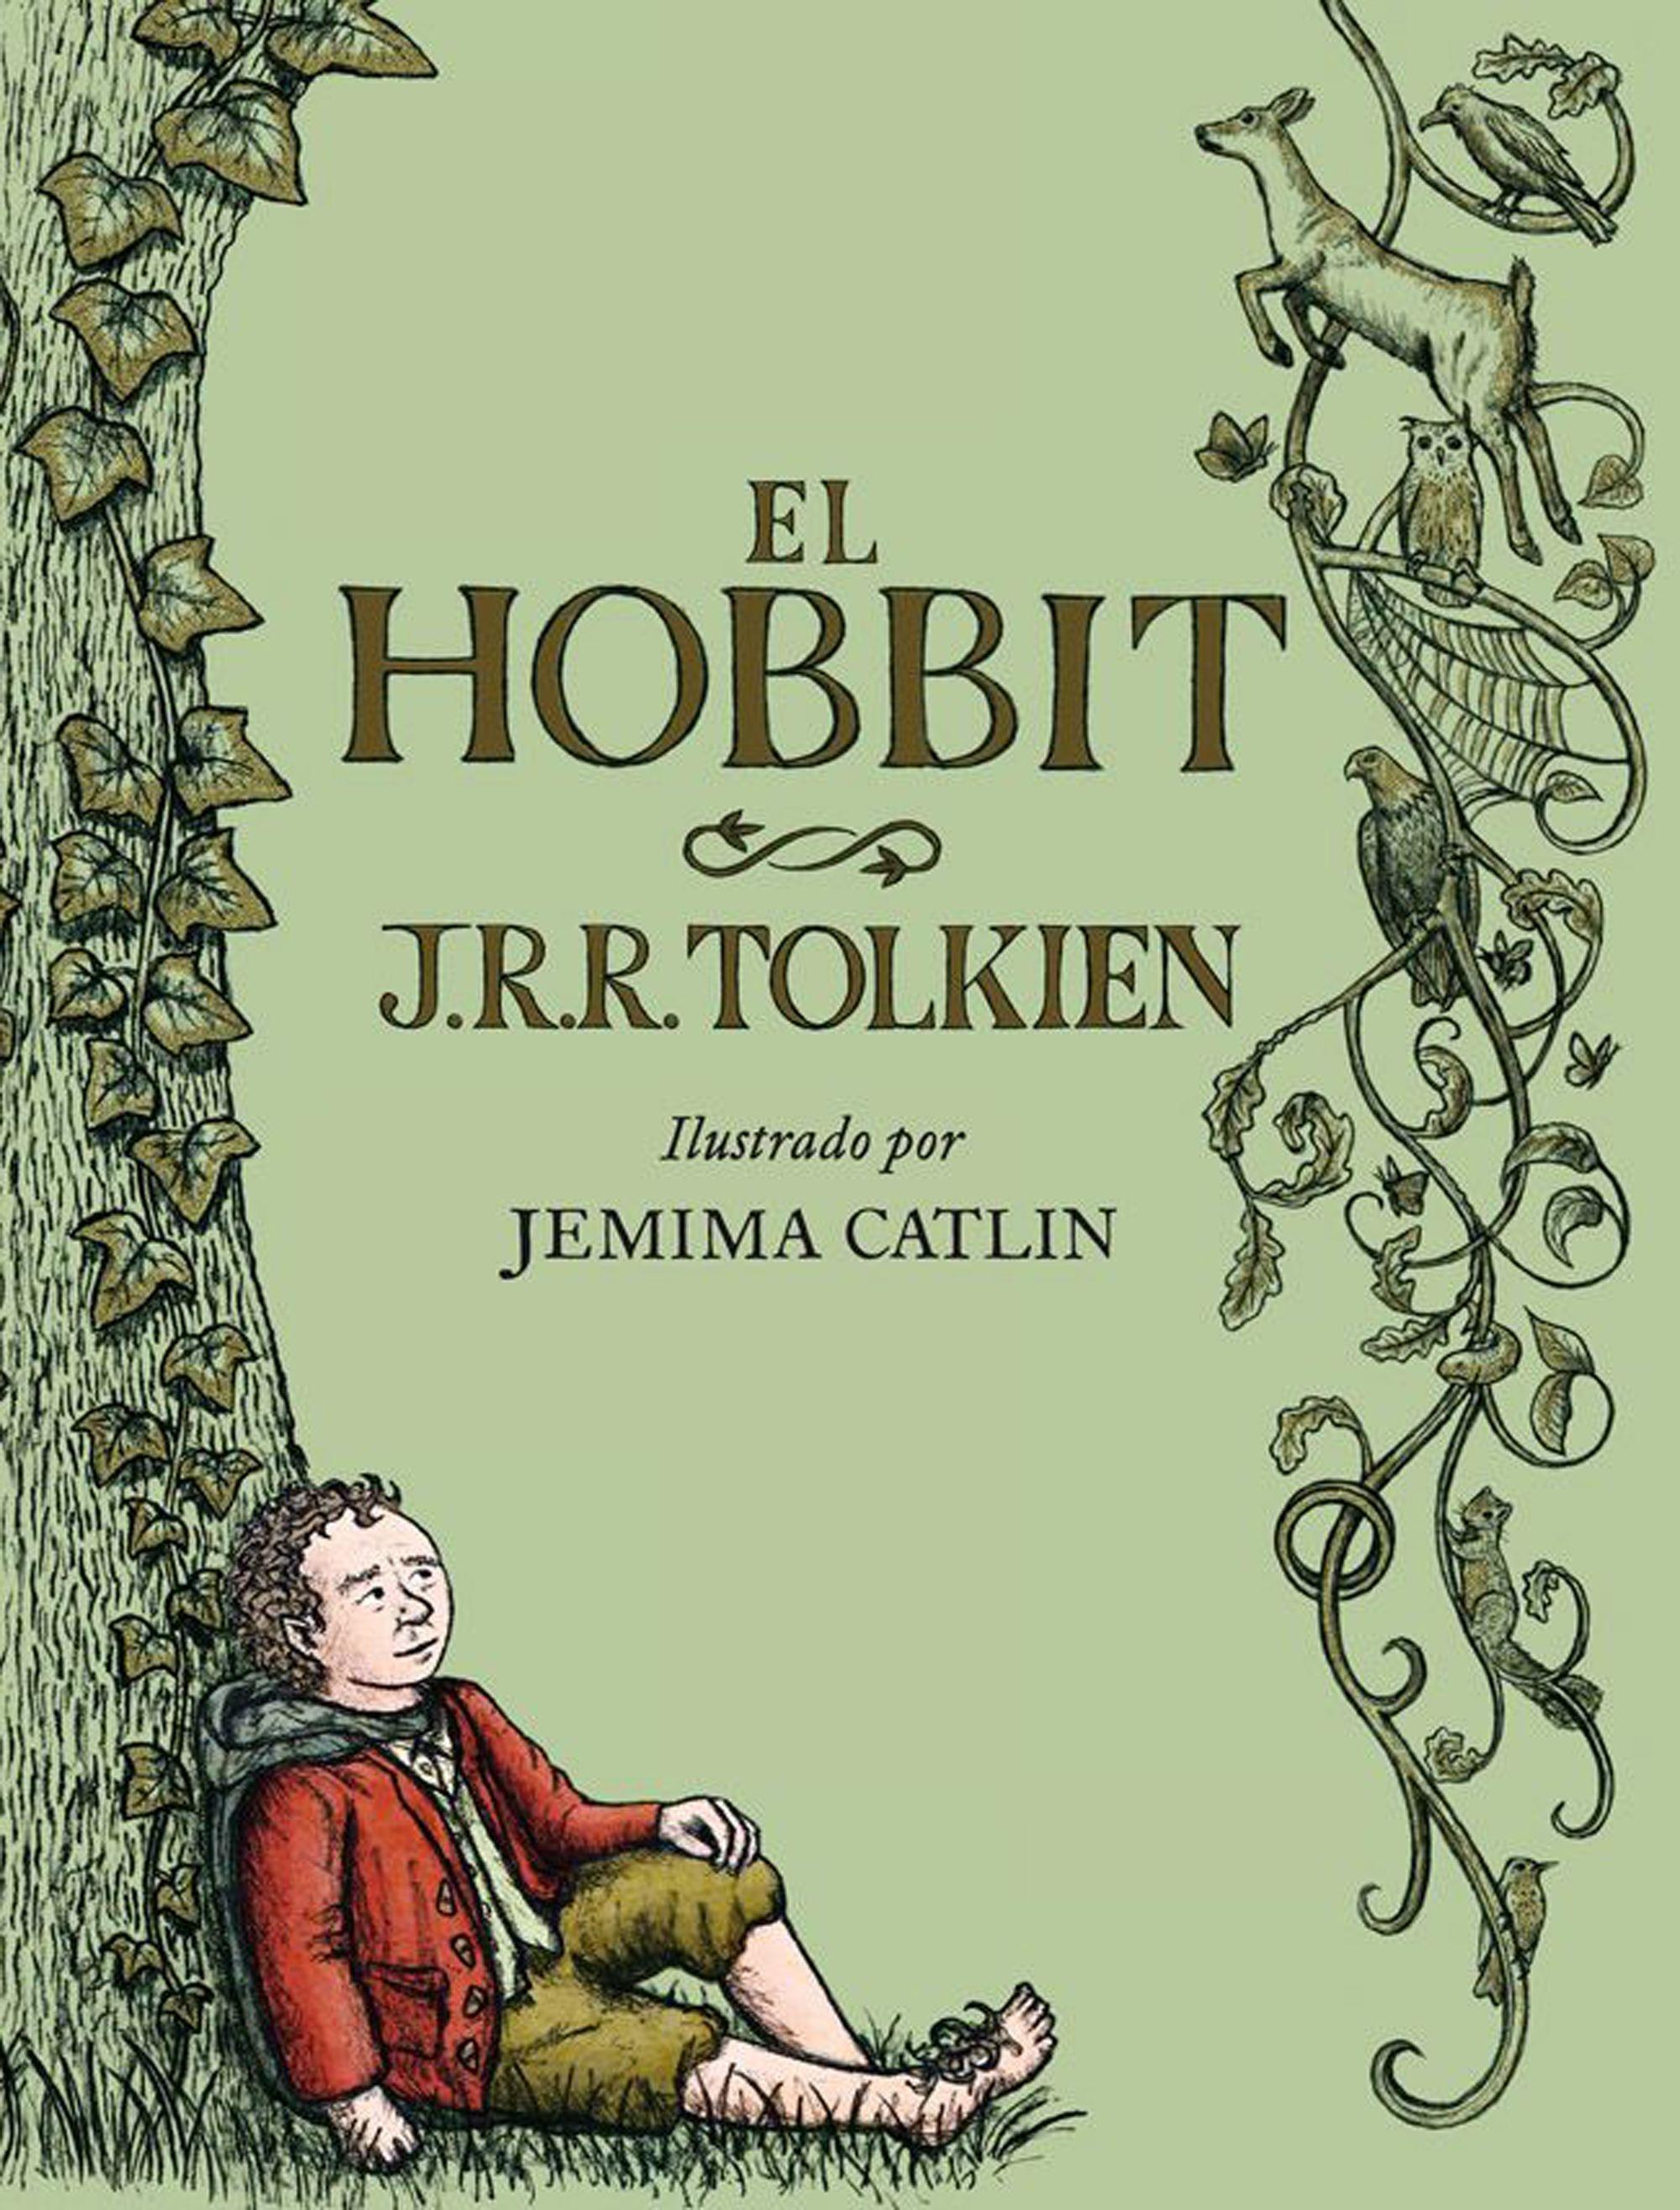 El Hobbit ilustrado por Jemima Catlin. 